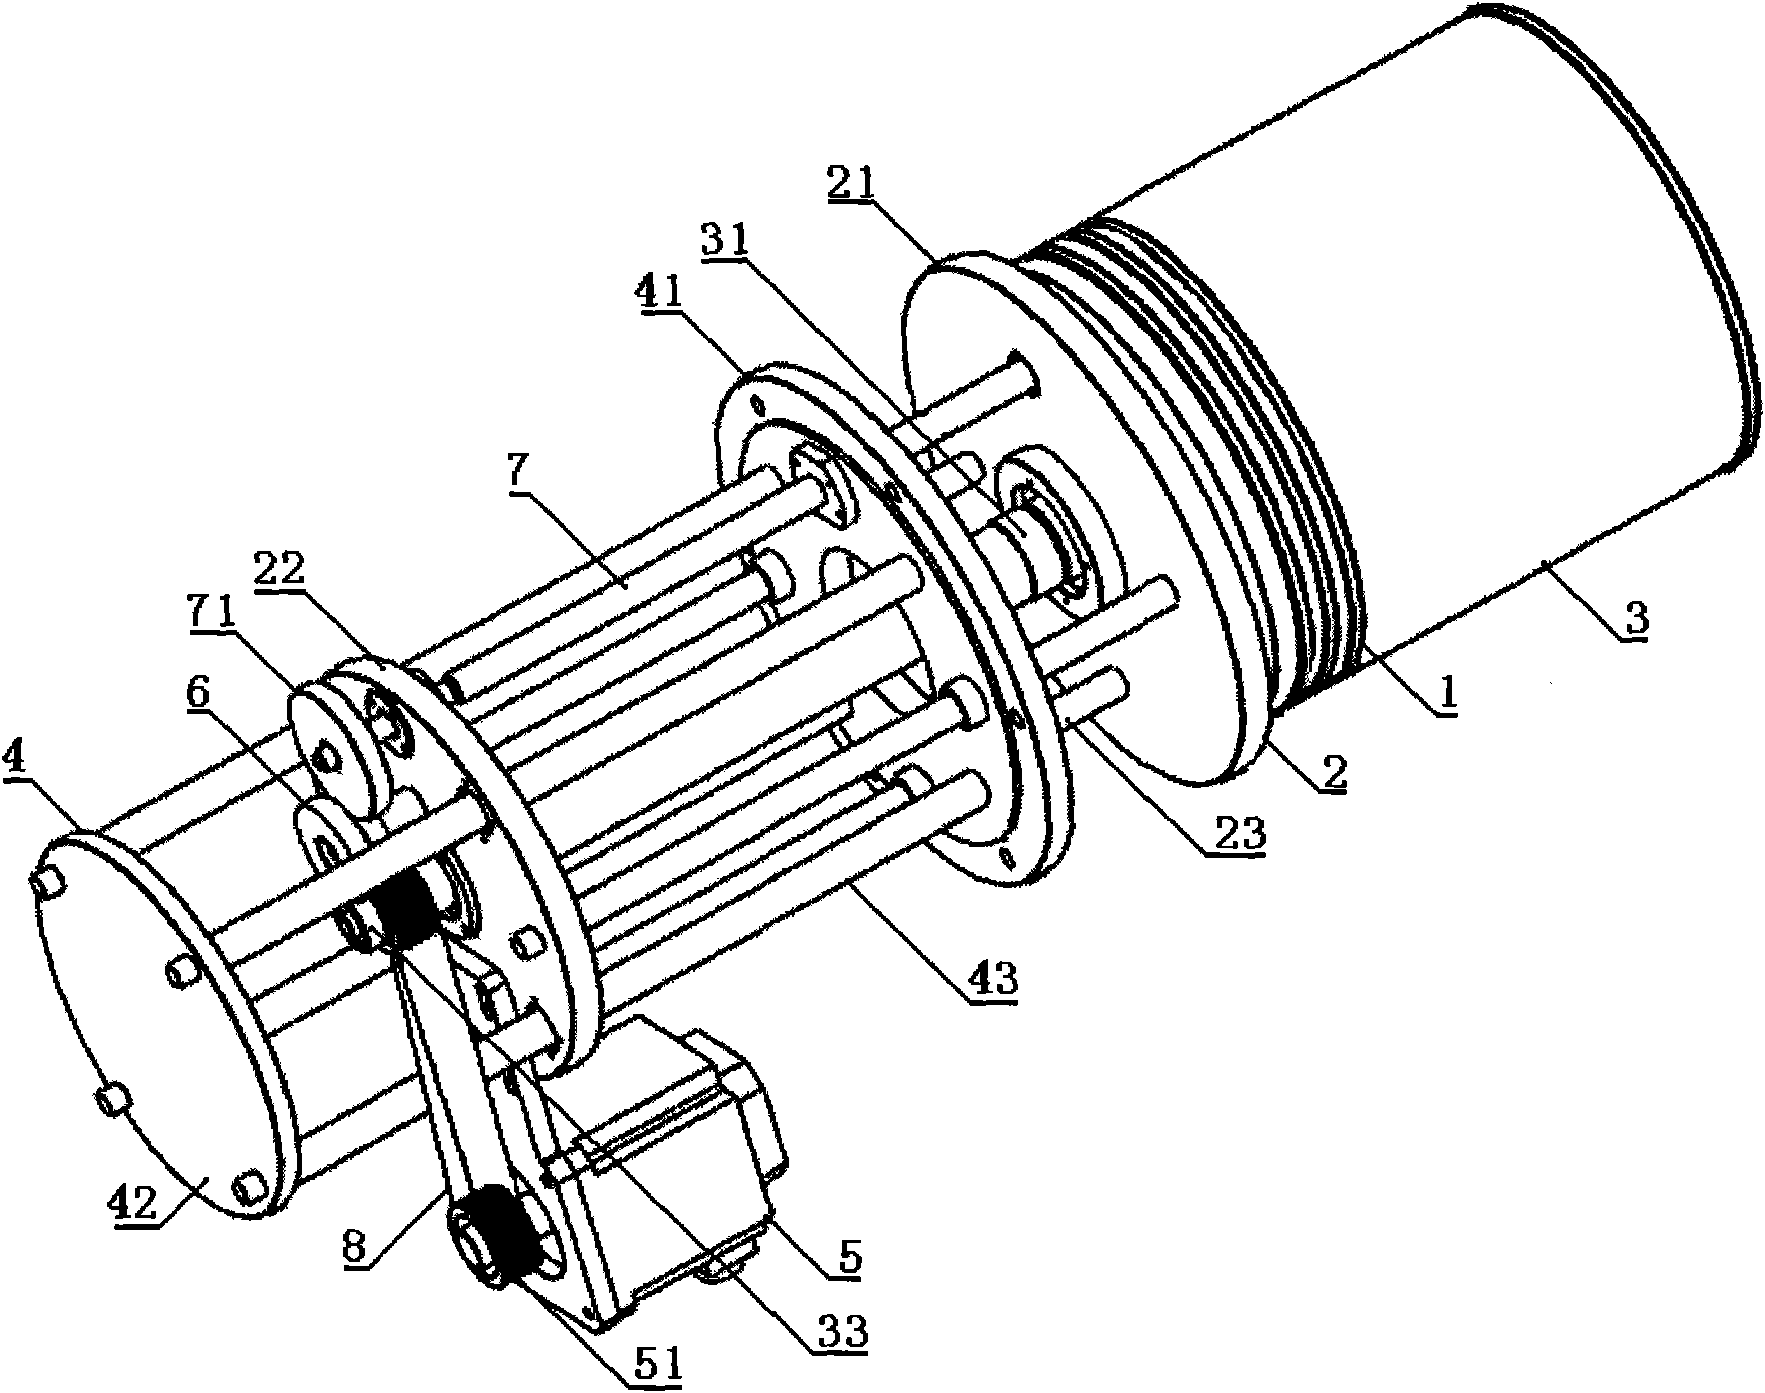 Wire arraying mechanism of wire winding drum of diamond wire cutting machine